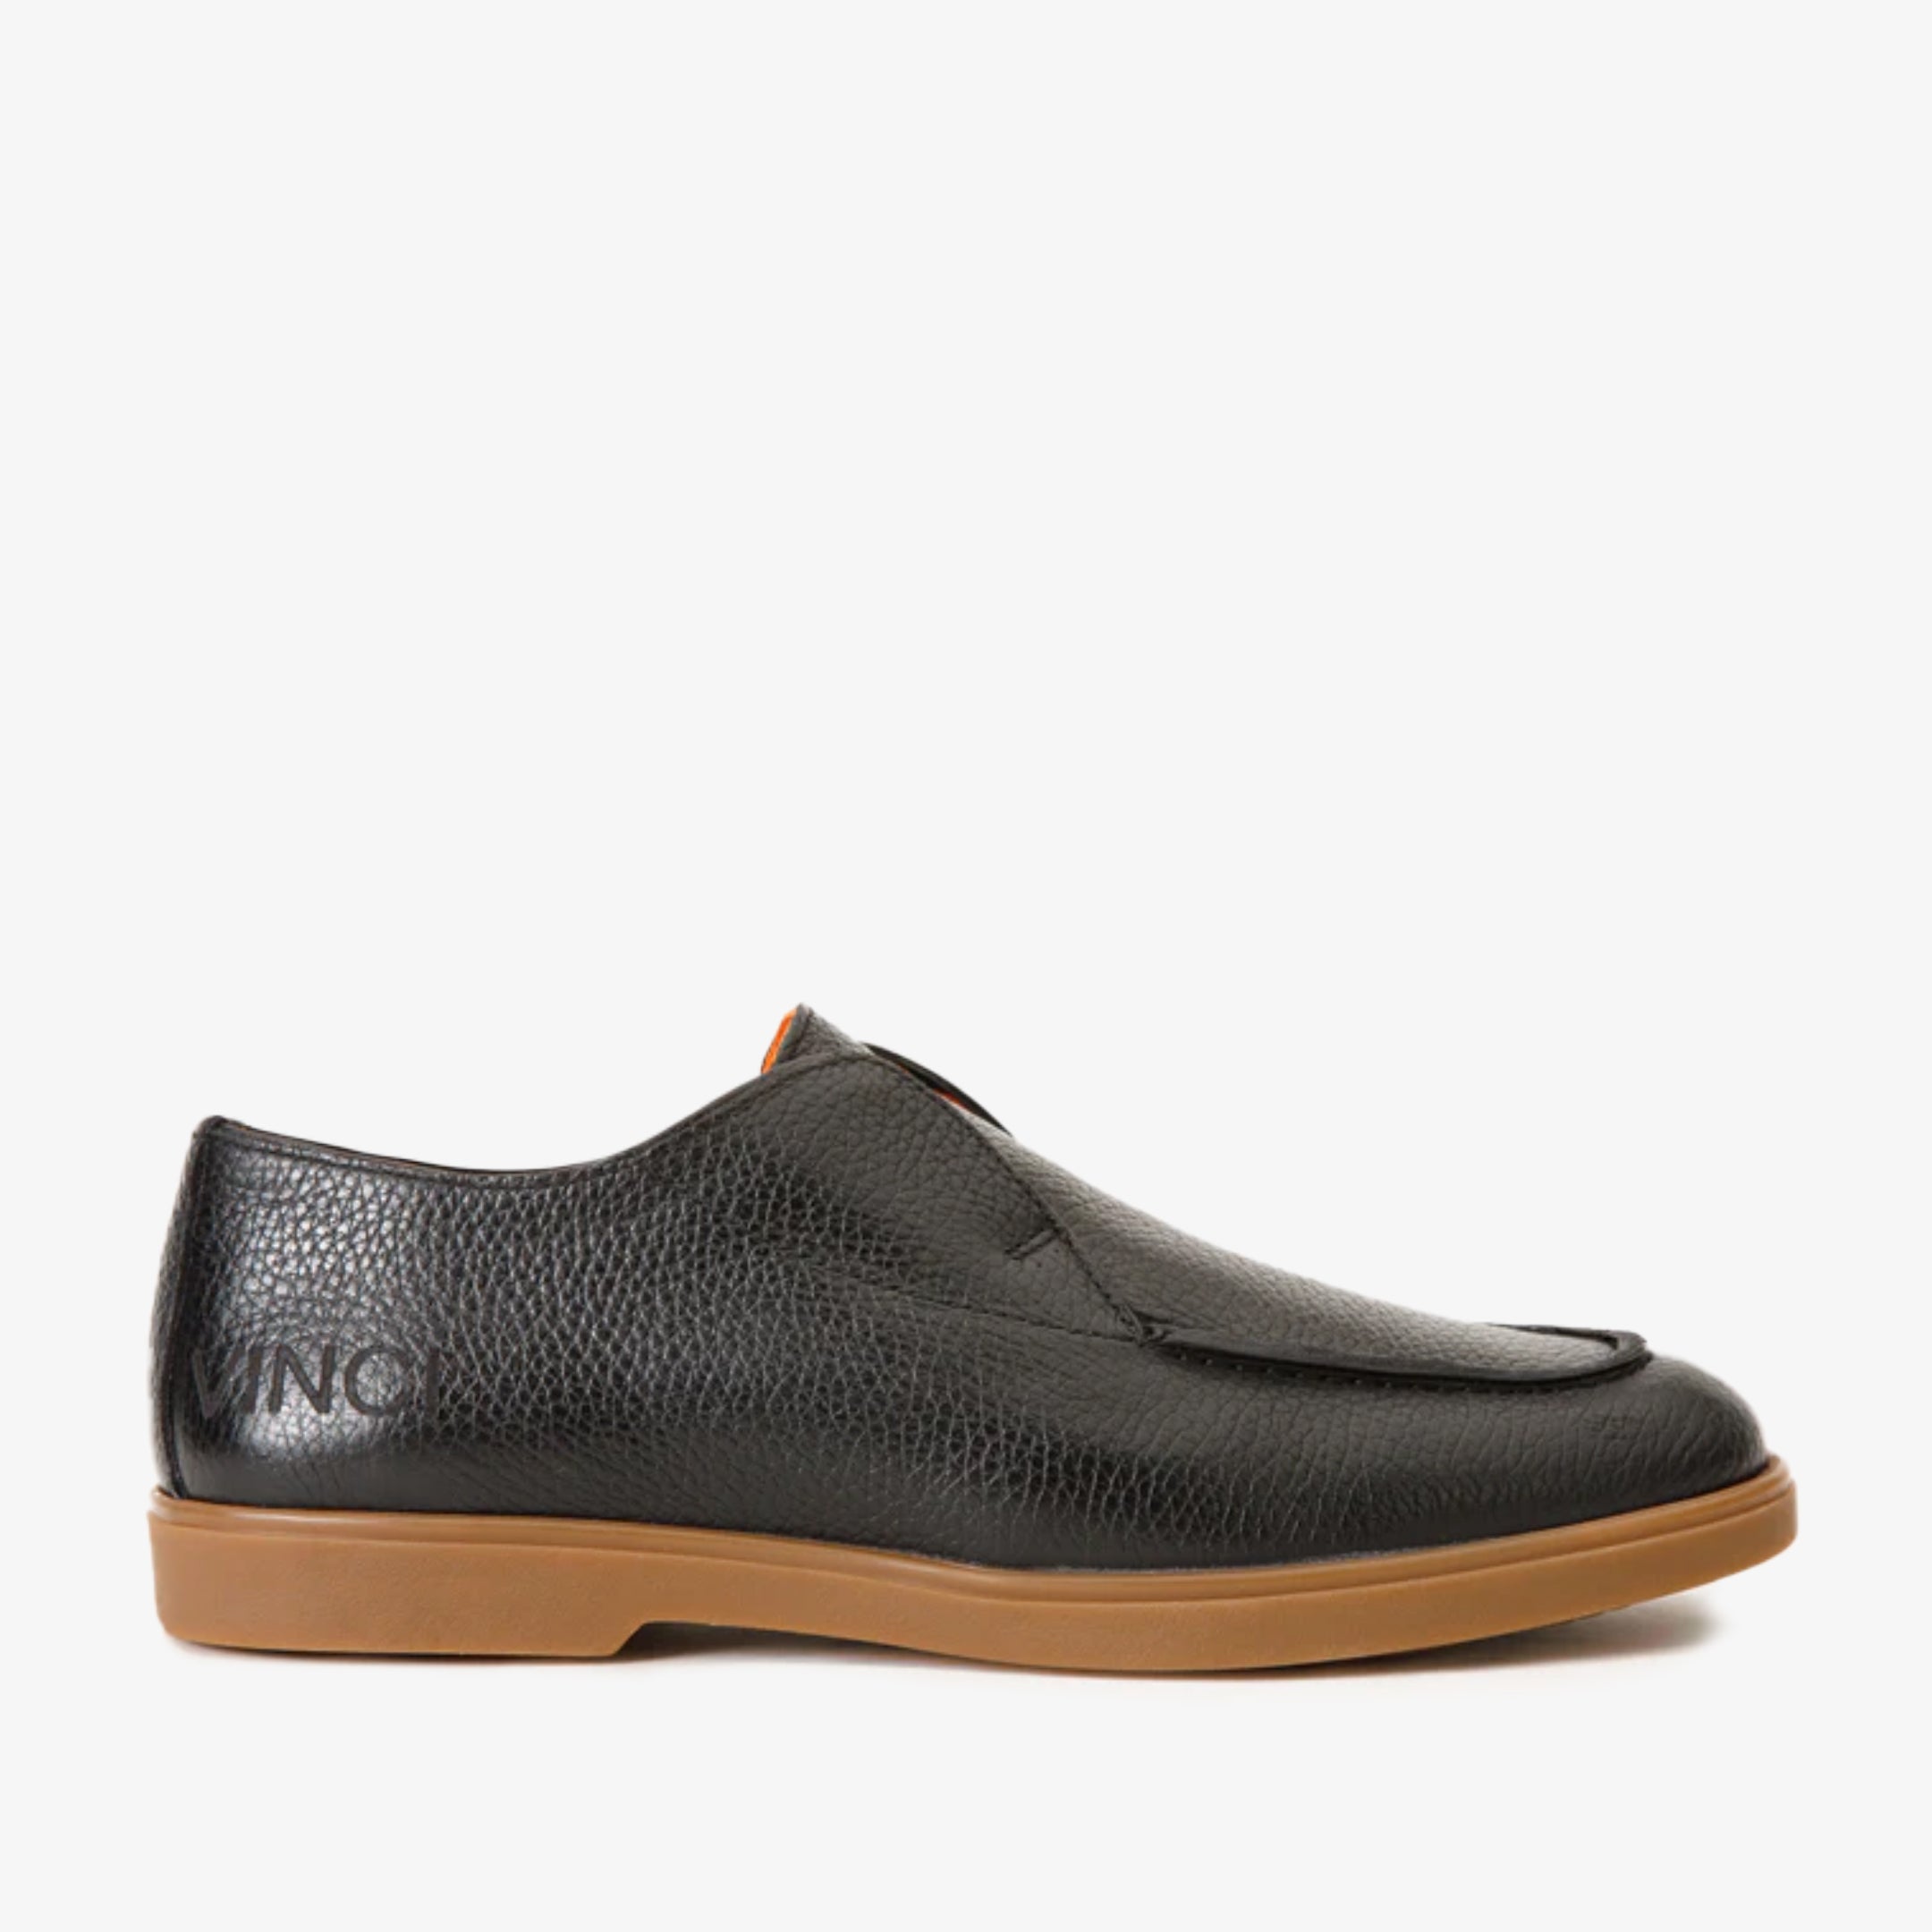 The Beykoz Leather Chukka Loafer Men  Shoe